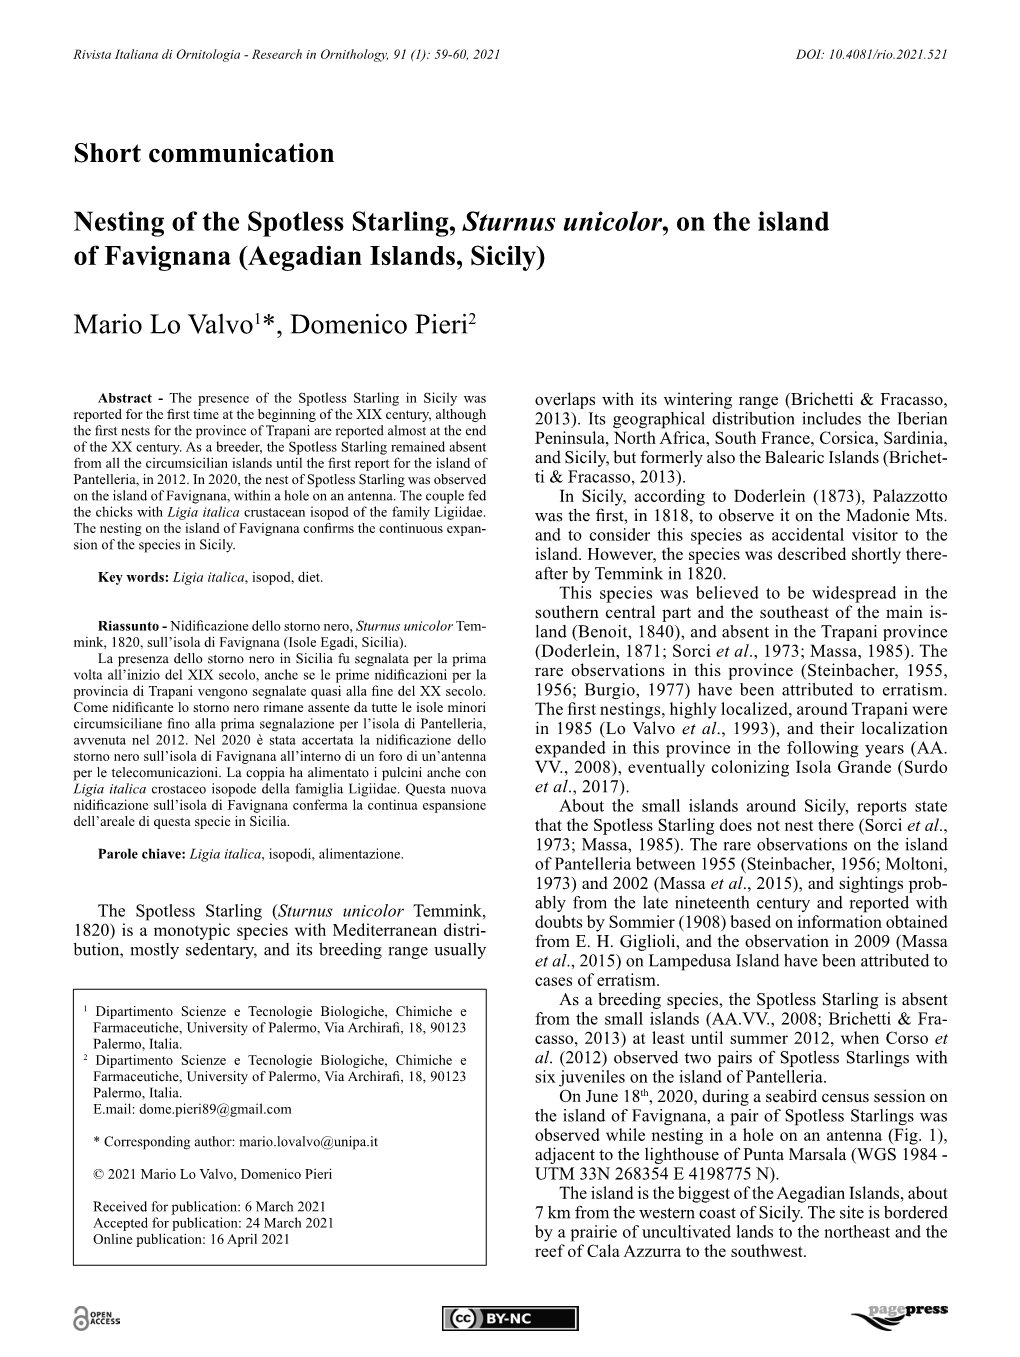 Short Communication Nesting of the Spotless Starling, Sturnus Unicolor